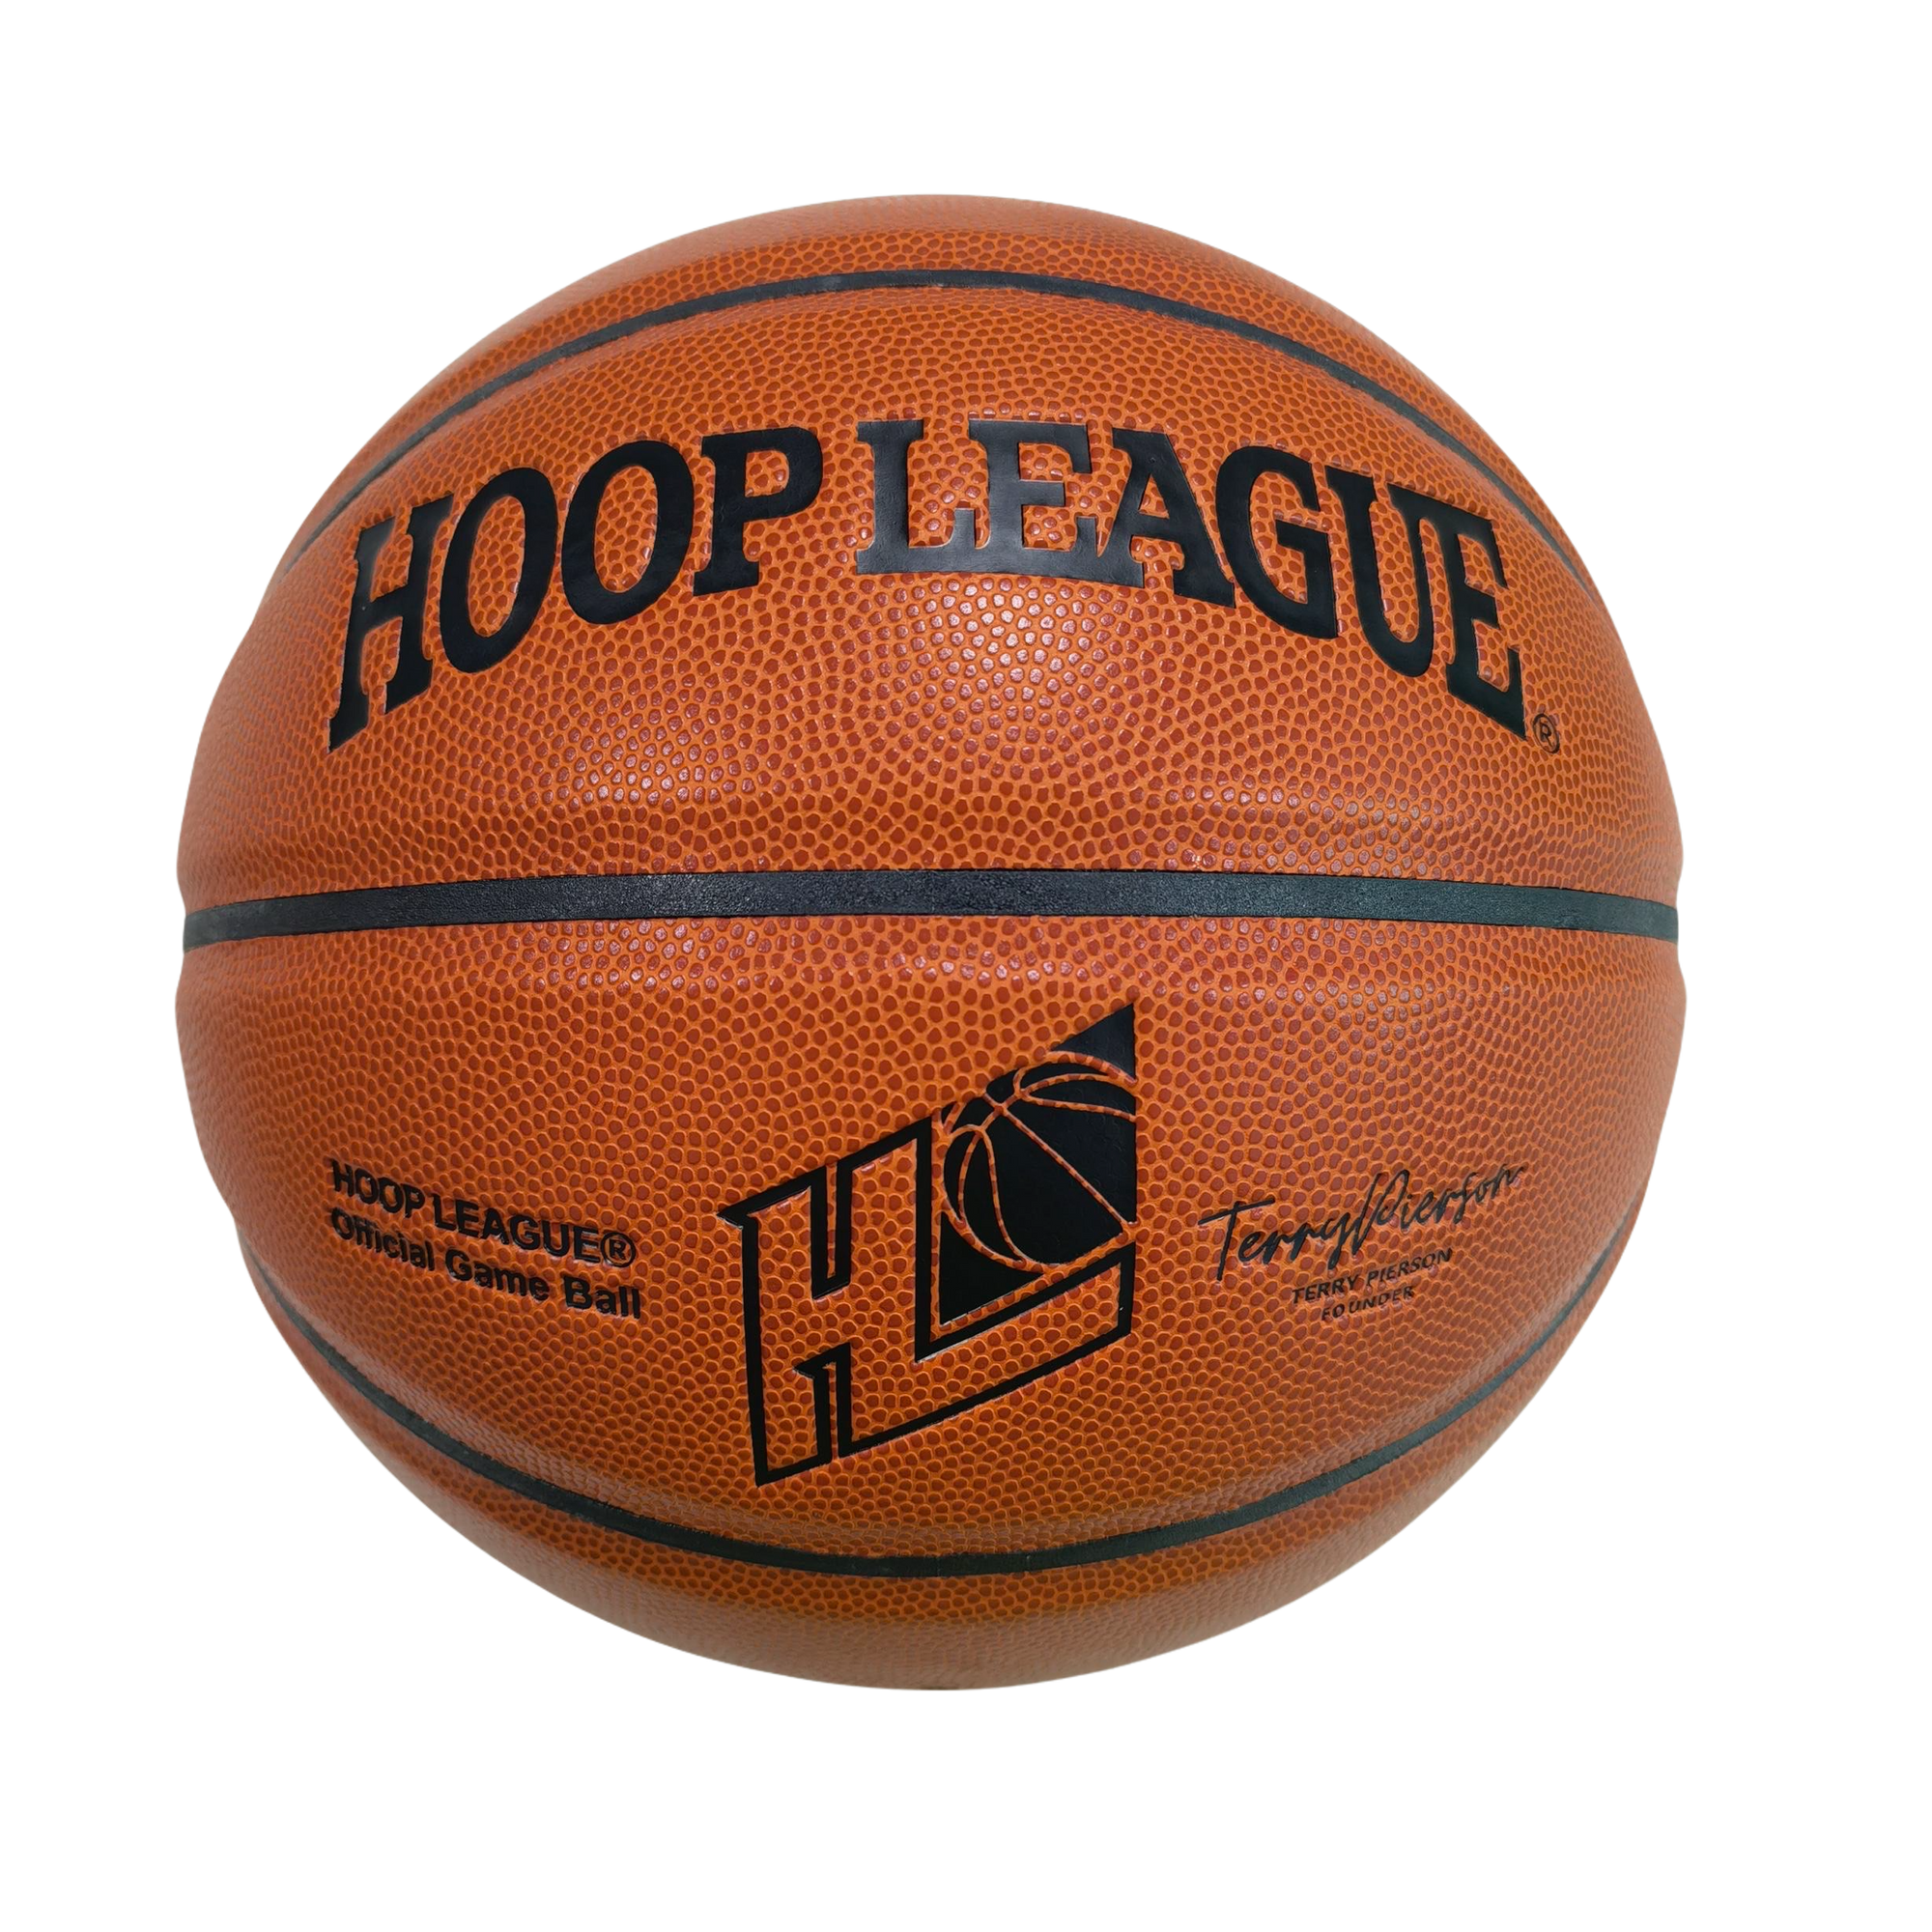 Hoop League Microfiber Leather Indoor Game Basketball 